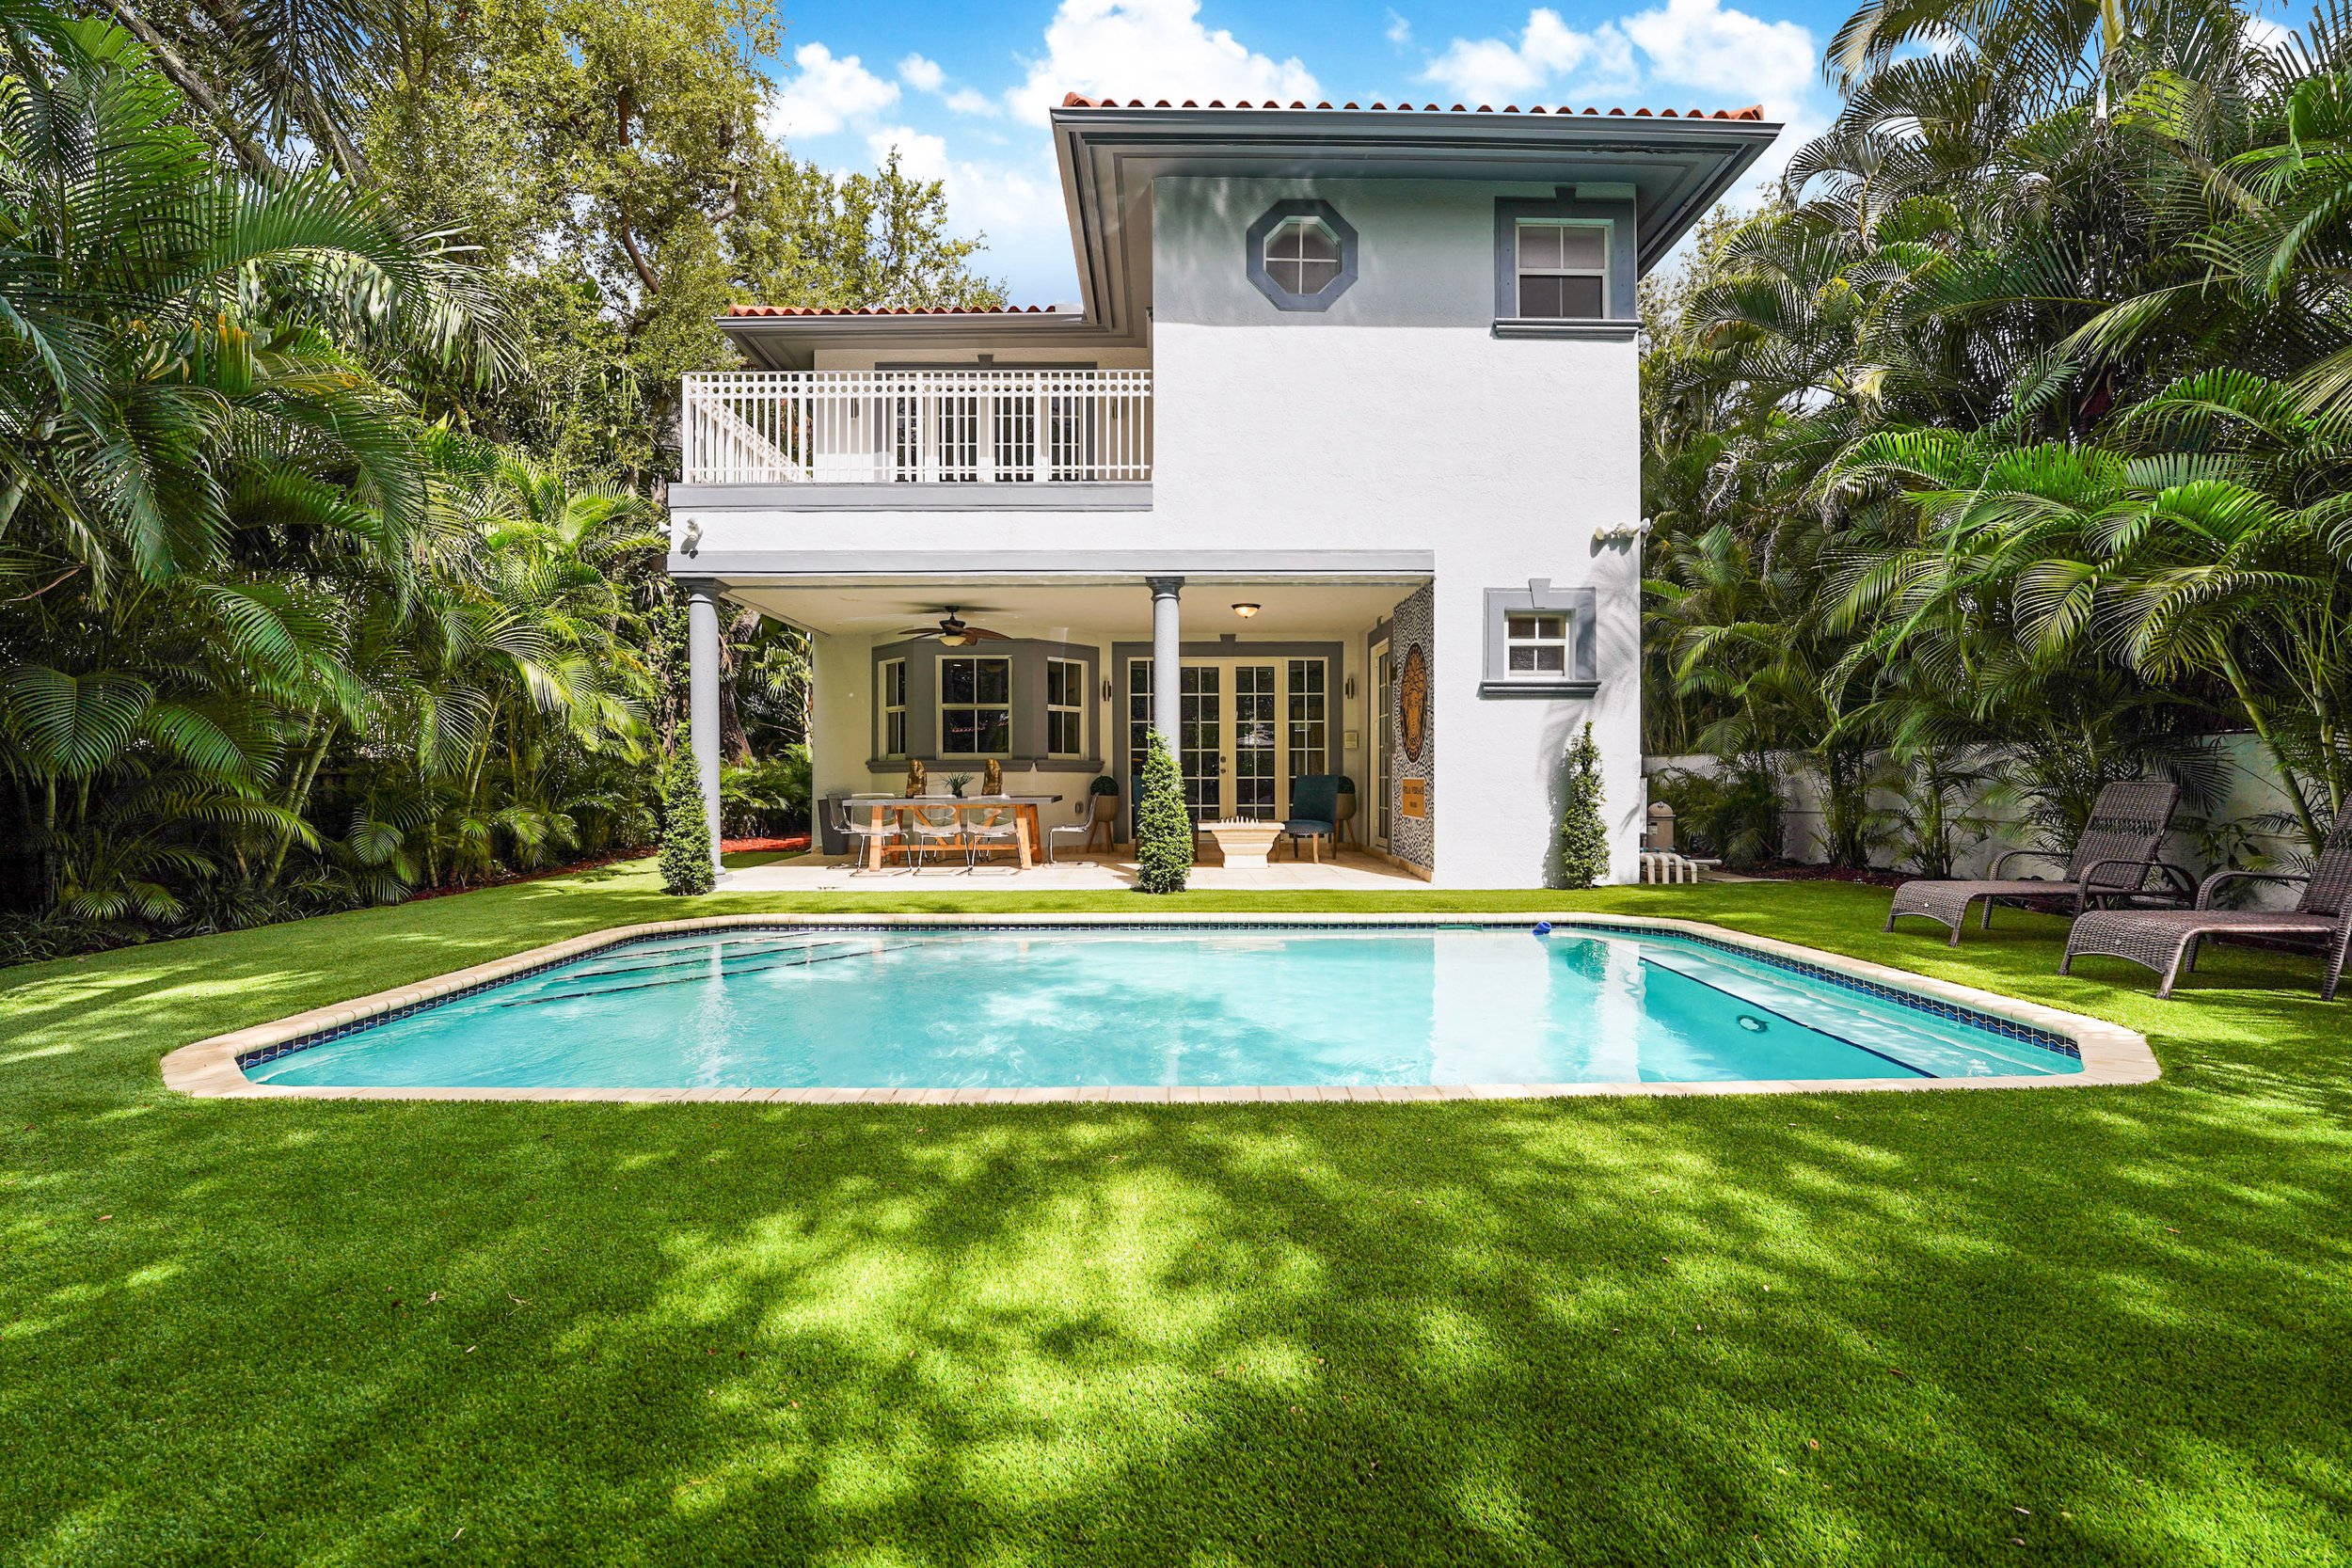 Check Out 'Villa Versace' In Miami Shores Asking $2.195 Million 2.jpg